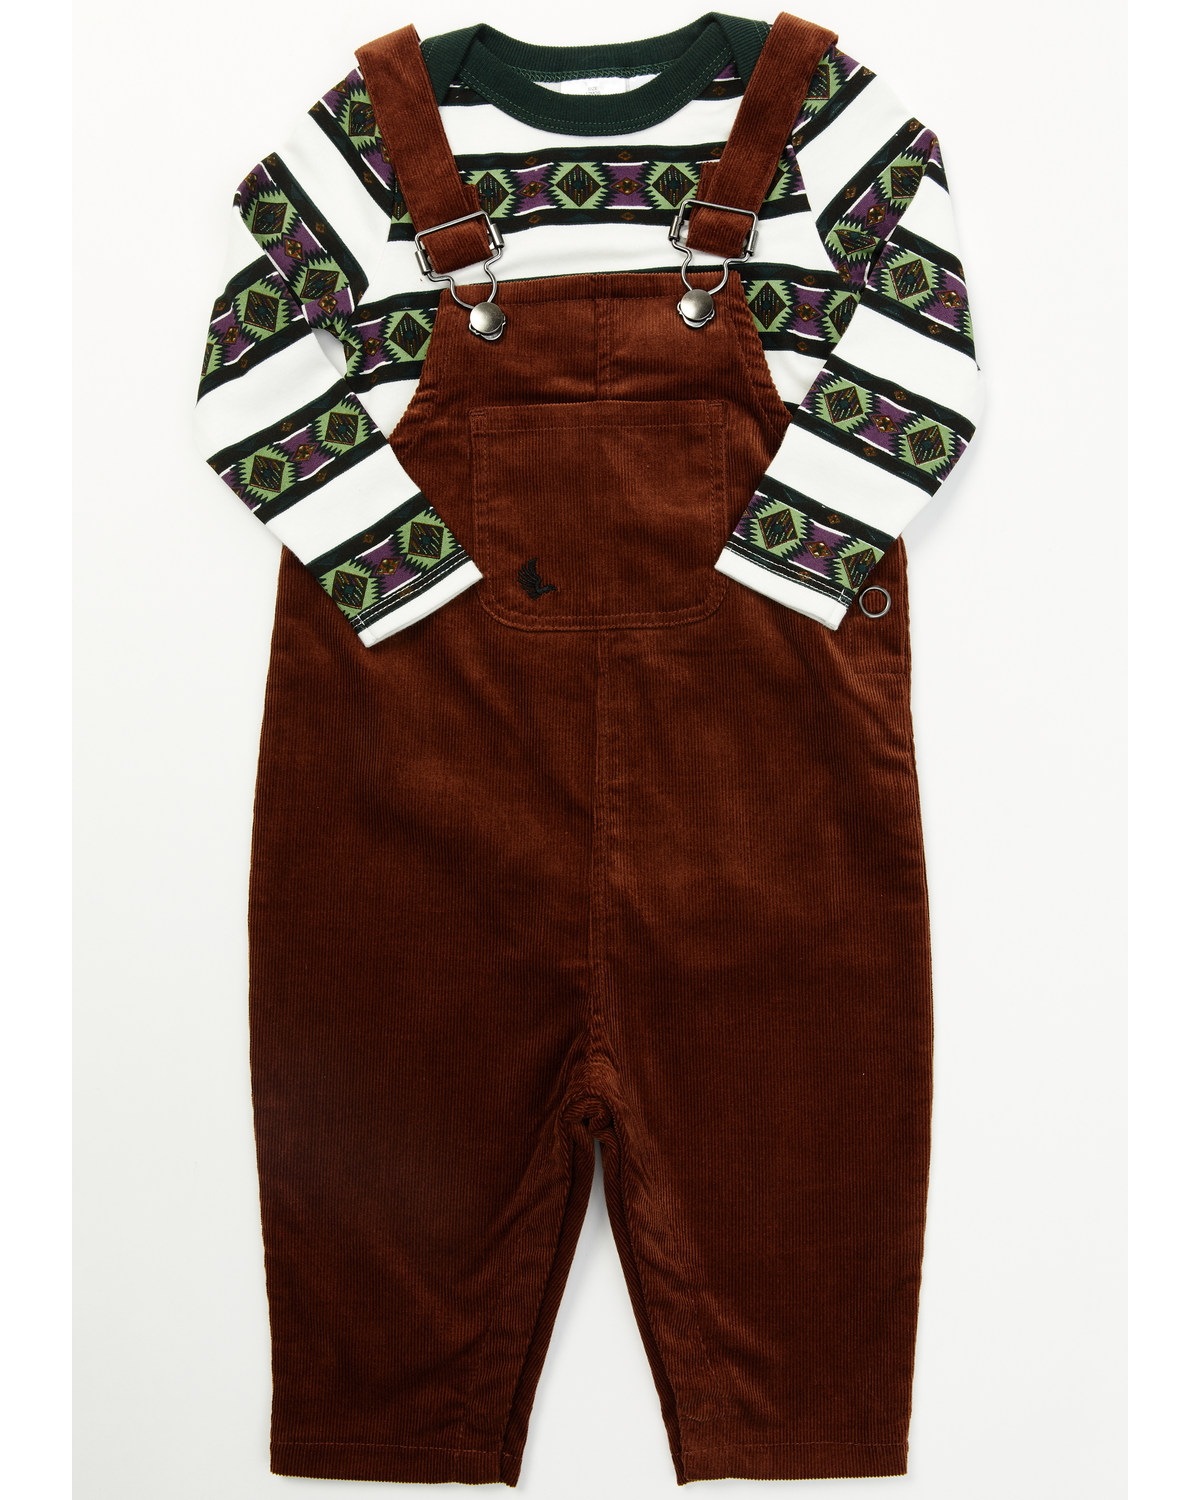 Cody James Infant Boys' Overalls & Striped Shirt Onesie Set